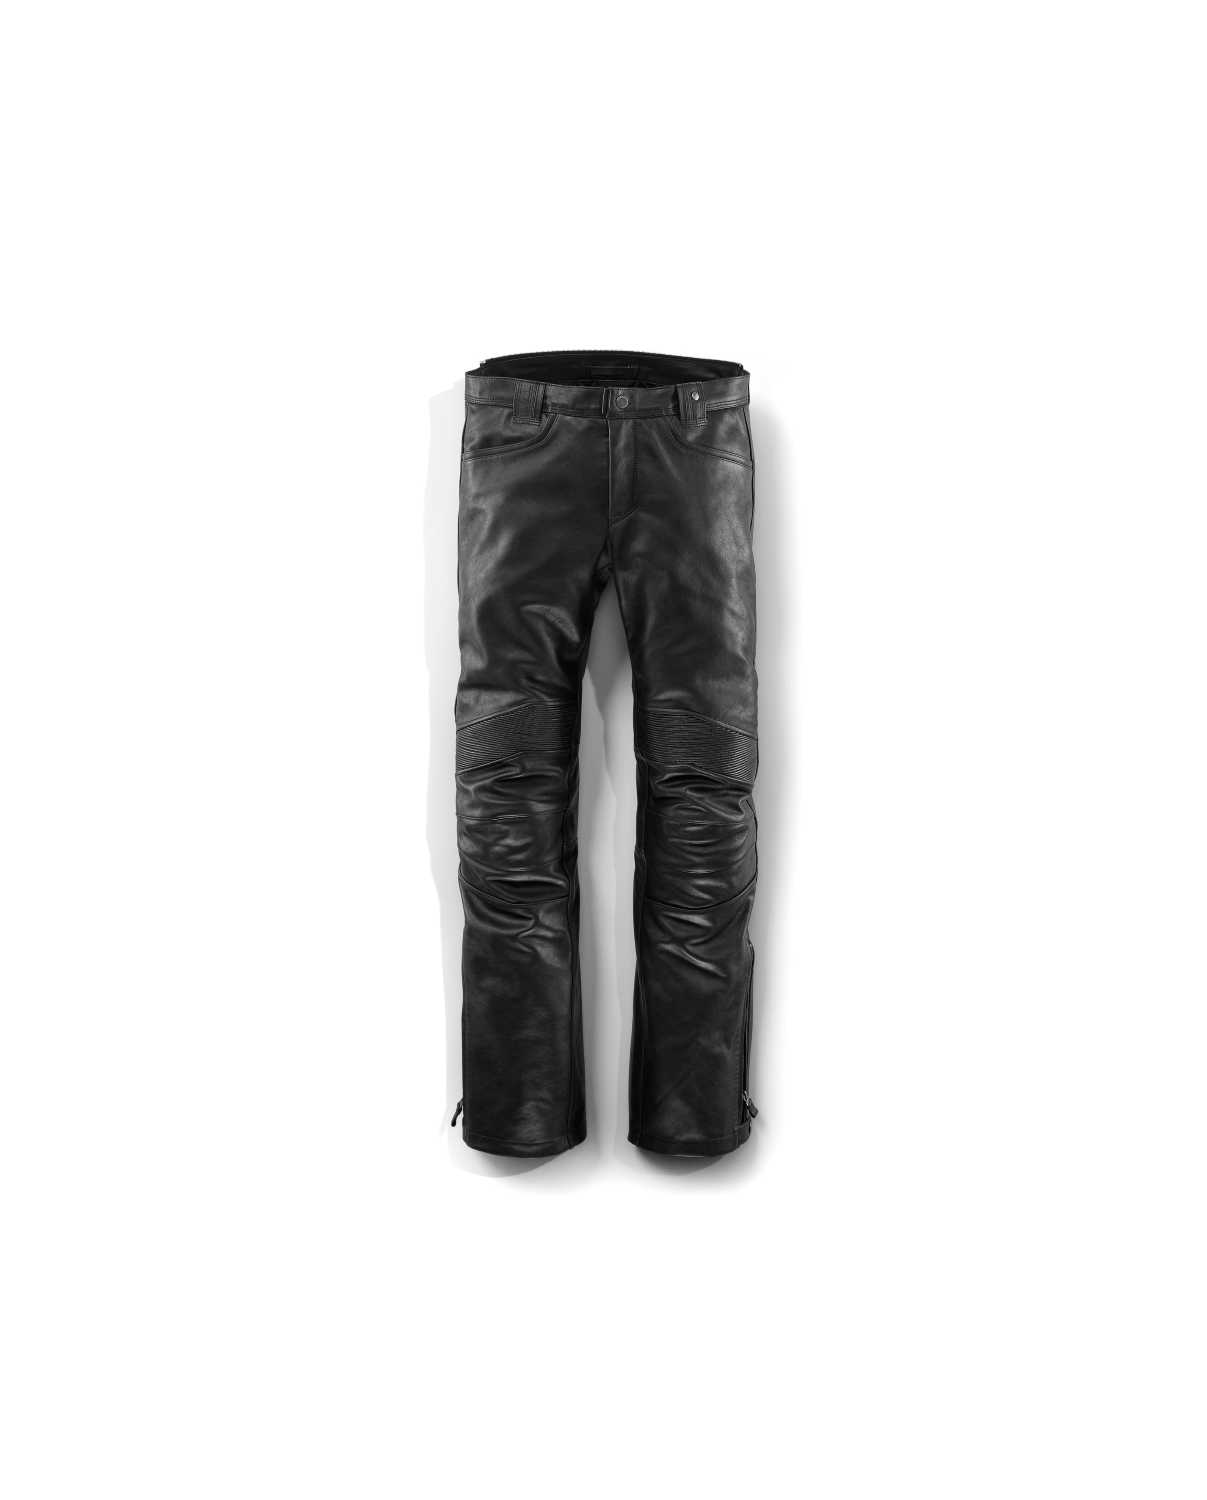 BMW Trousers DarkNite, men, black (10/2016)